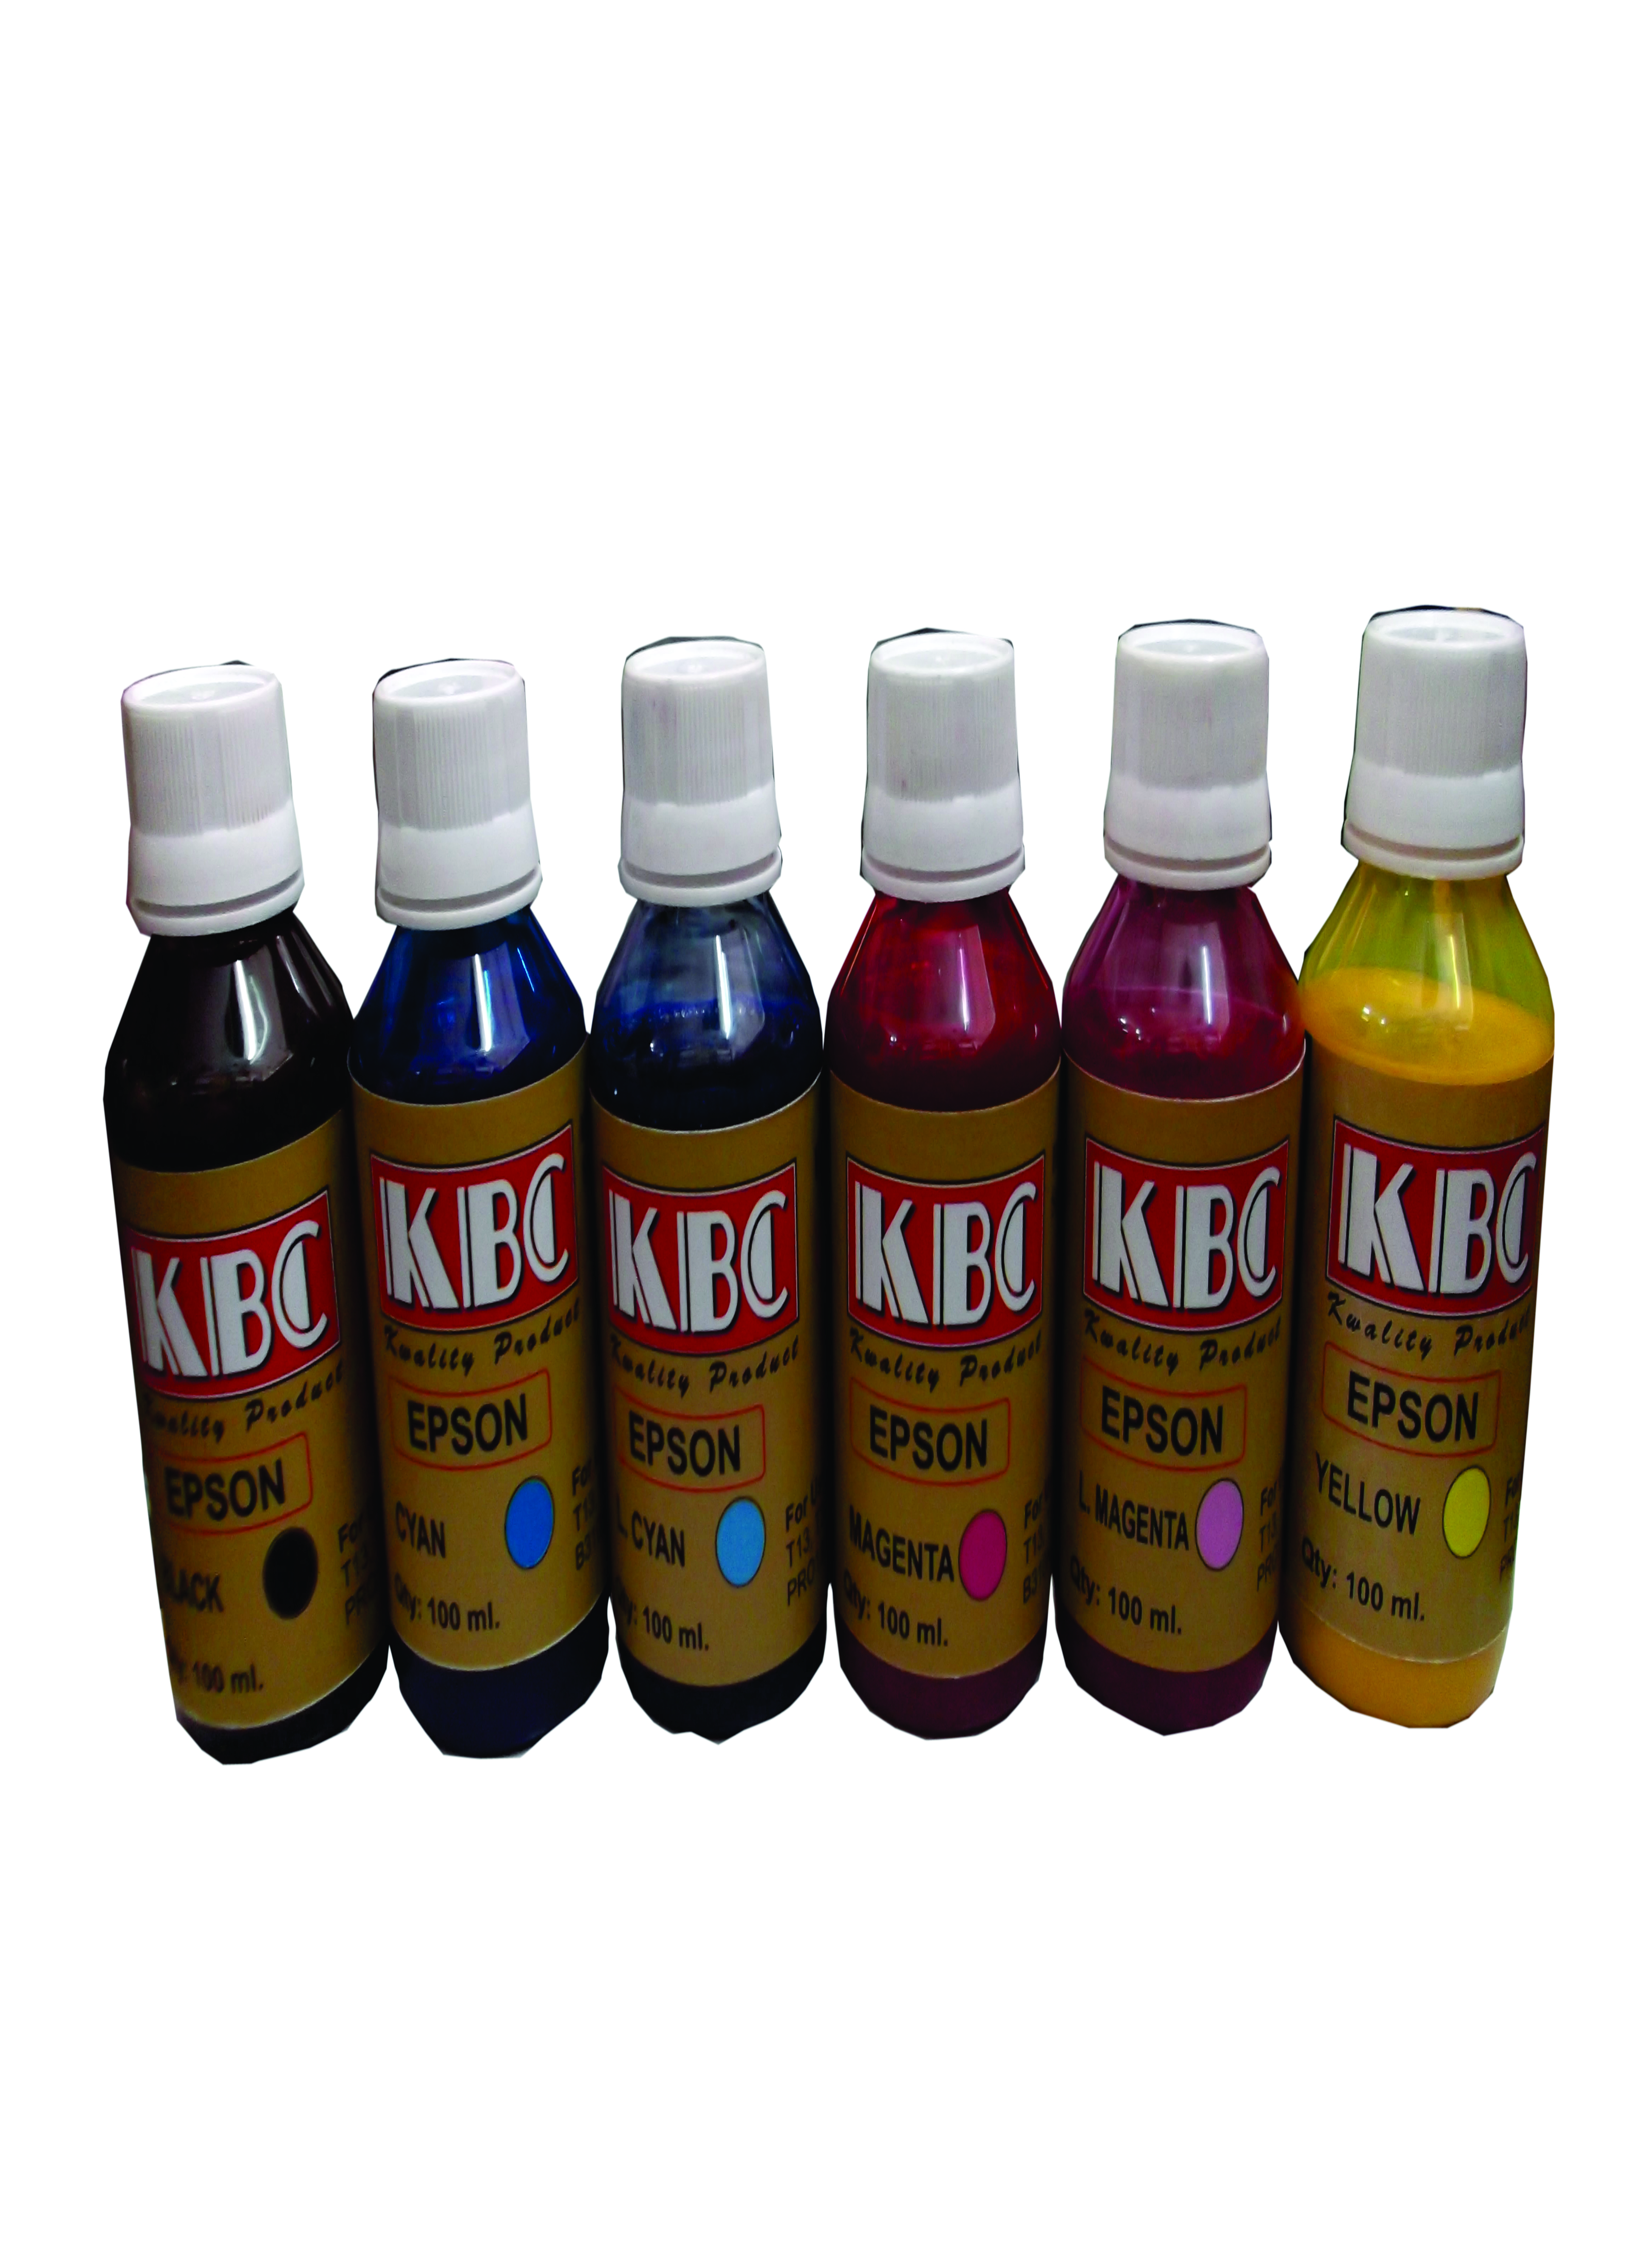 Manufacturers Exporters and Wholesale Suppliers of Epson Dye Sublimation Ink Mumbai Maharashtra